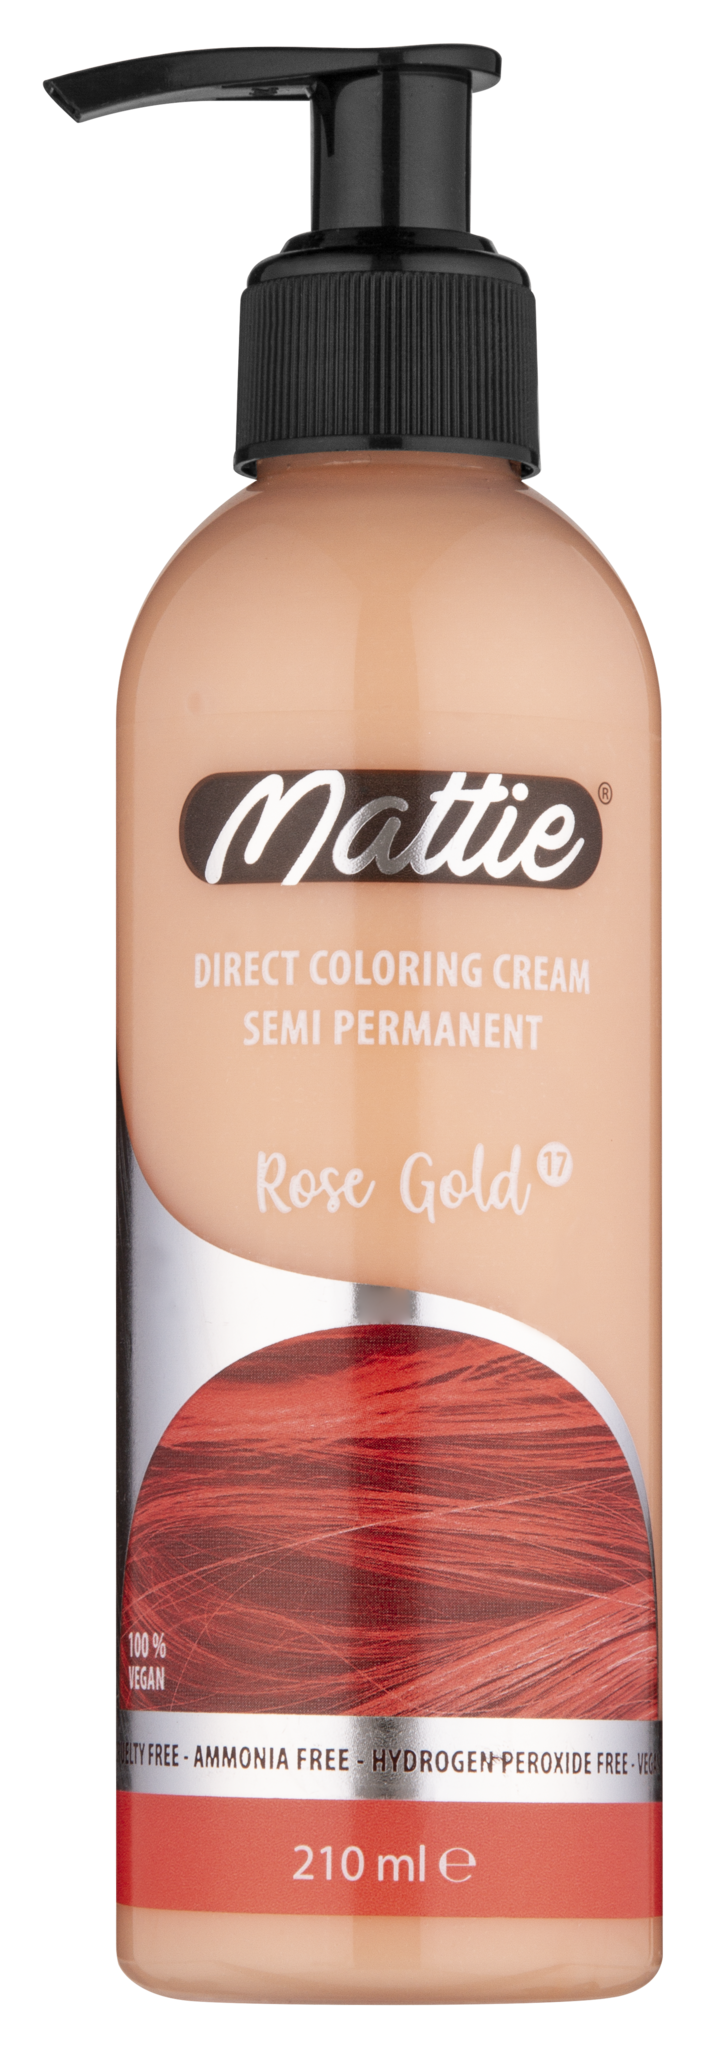 Mattie Direct Coloring Cream Semi-Permanent - Rose Gold 210ml